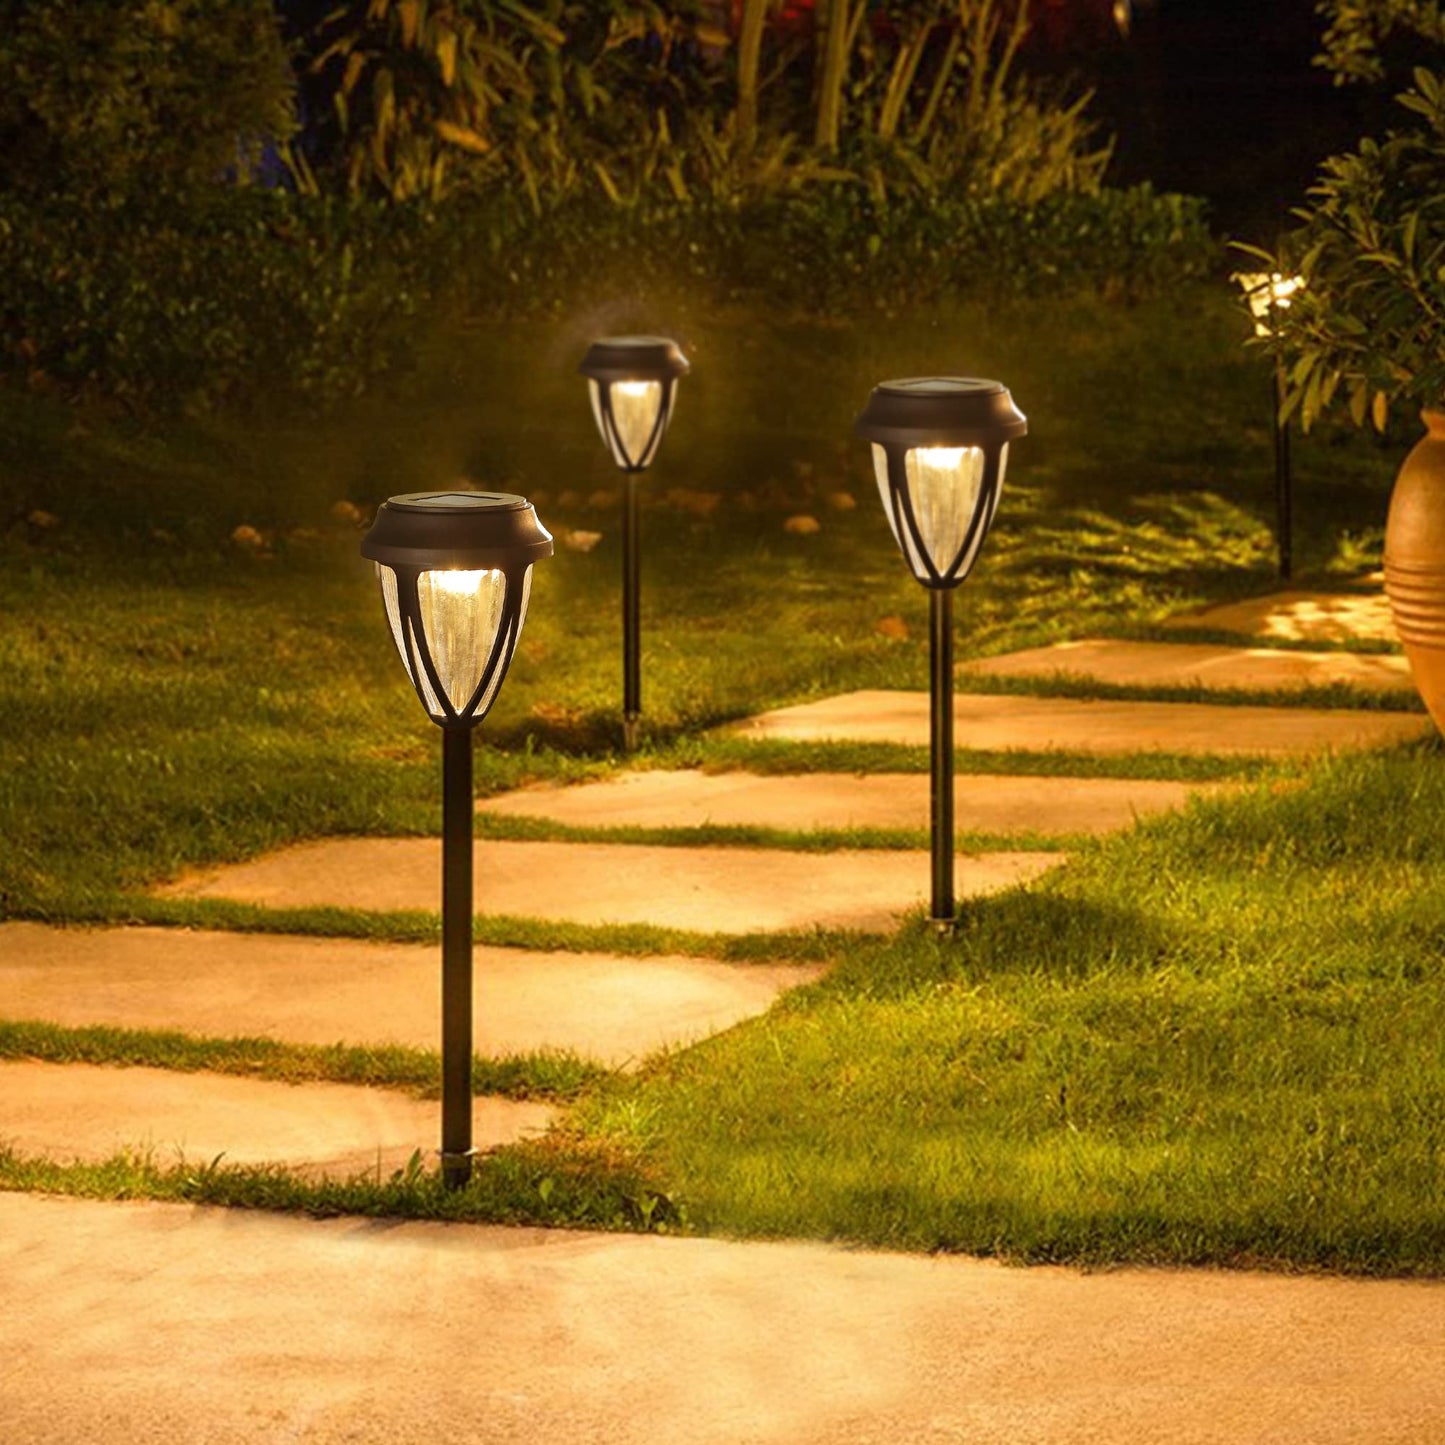 12 Pack Outdoor Solar Pathway Lights, Solar Powered Garden Decorative Lights, Auto On/Off & Waterproof Landscape Lighting for Lawn Patio Yard Walkway Deck Driveway